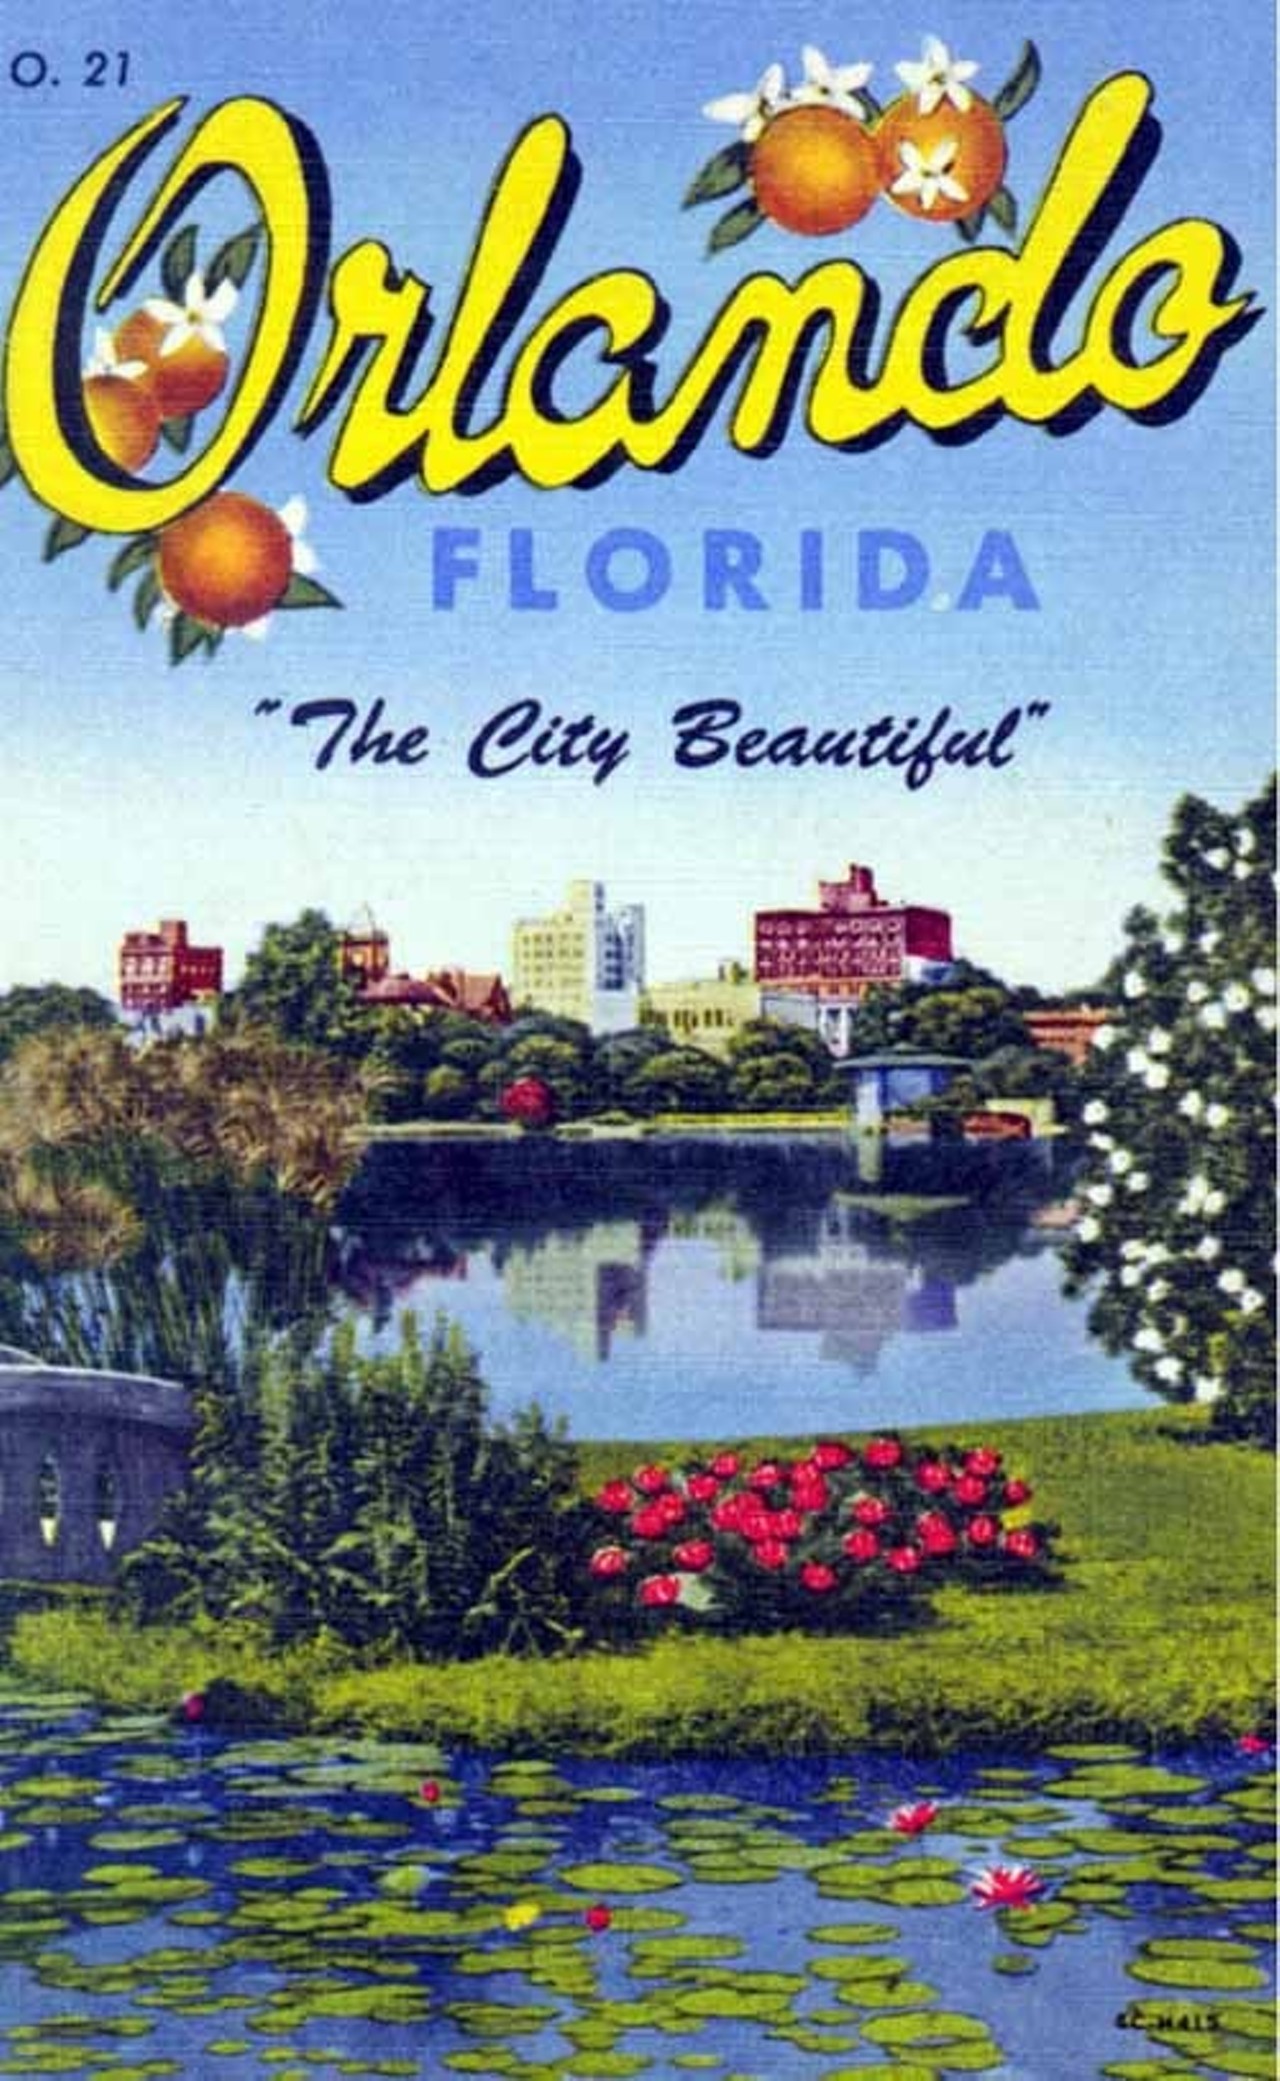 Vintage City Beautiful postcard, via Pinterest.com